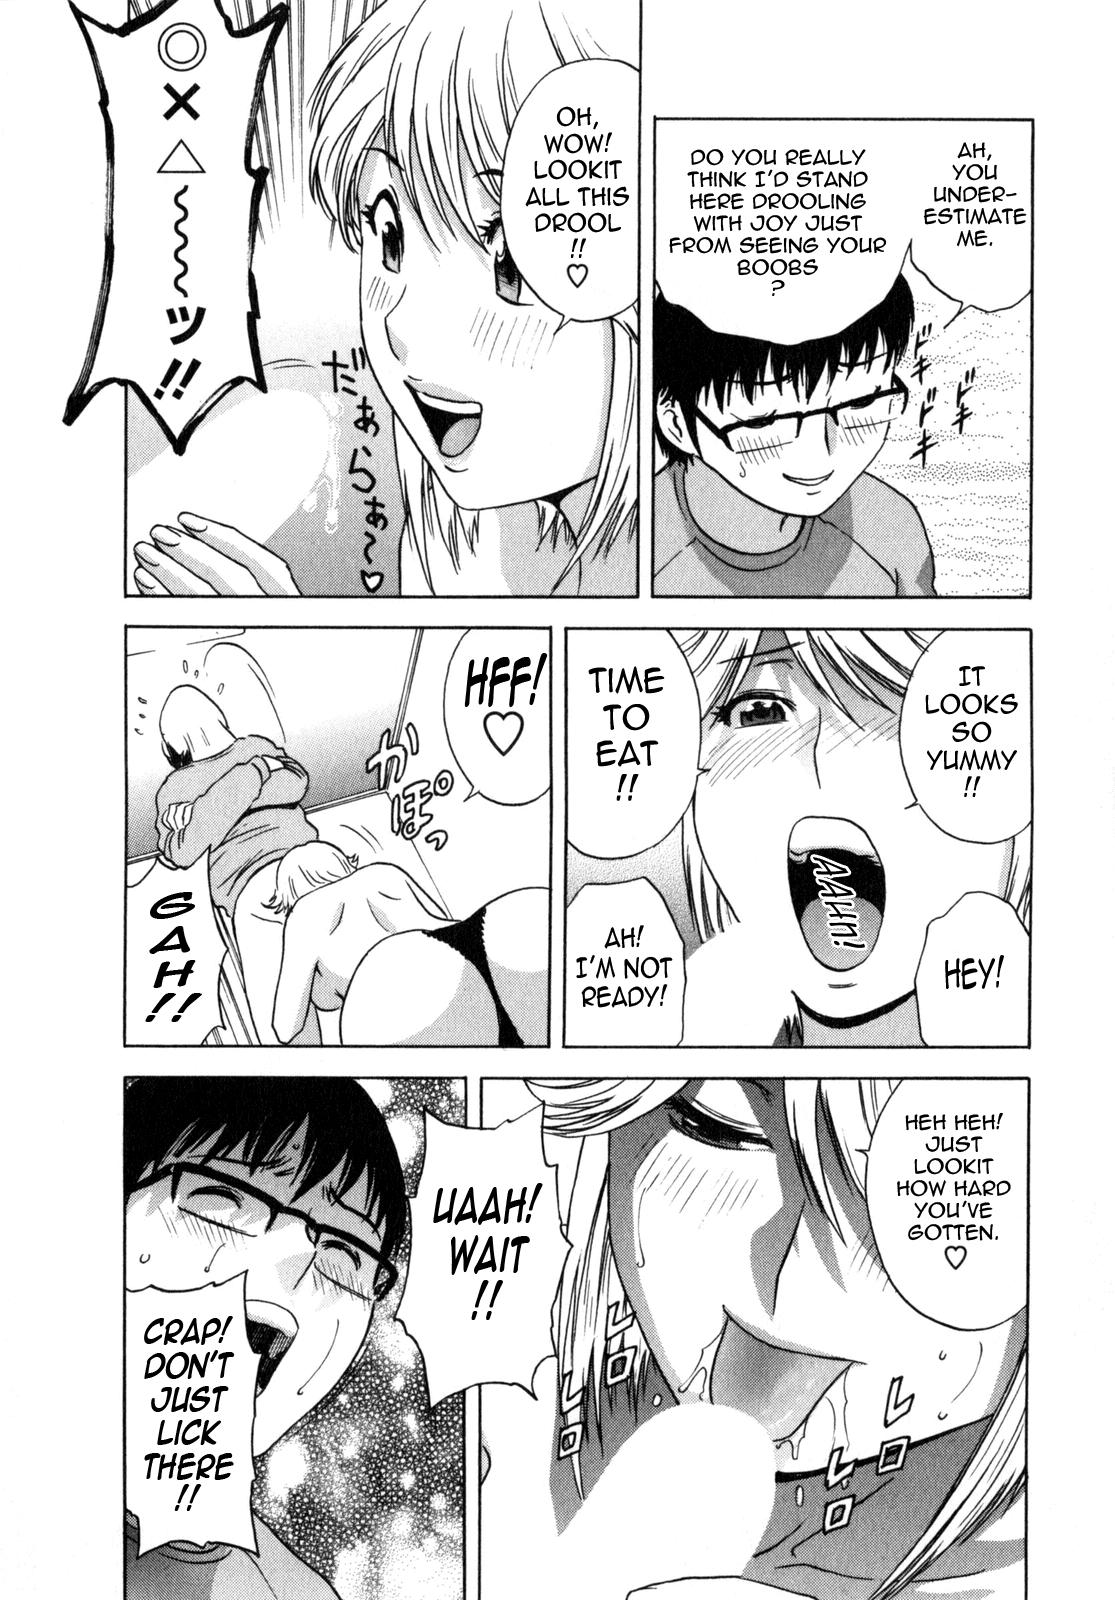 [Hidemaru] Life with Married Women Just Like a Manga 1 - Ch. 1-2 [English] {Tadanohito} 33